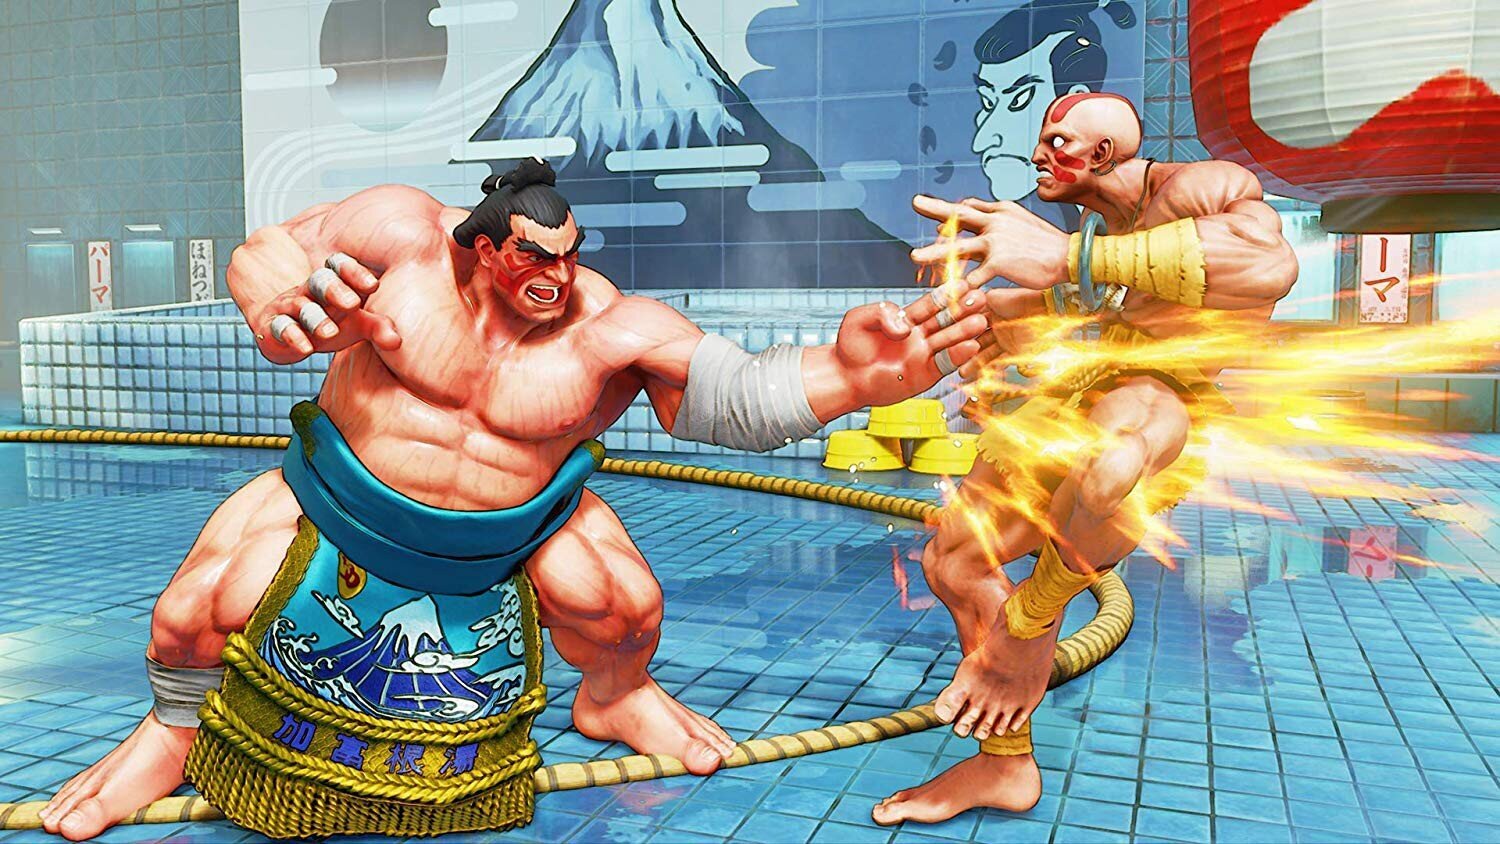 Street Fighter V: Champion Edition PS4 cena un informācija | Datorspēles | 220.lv